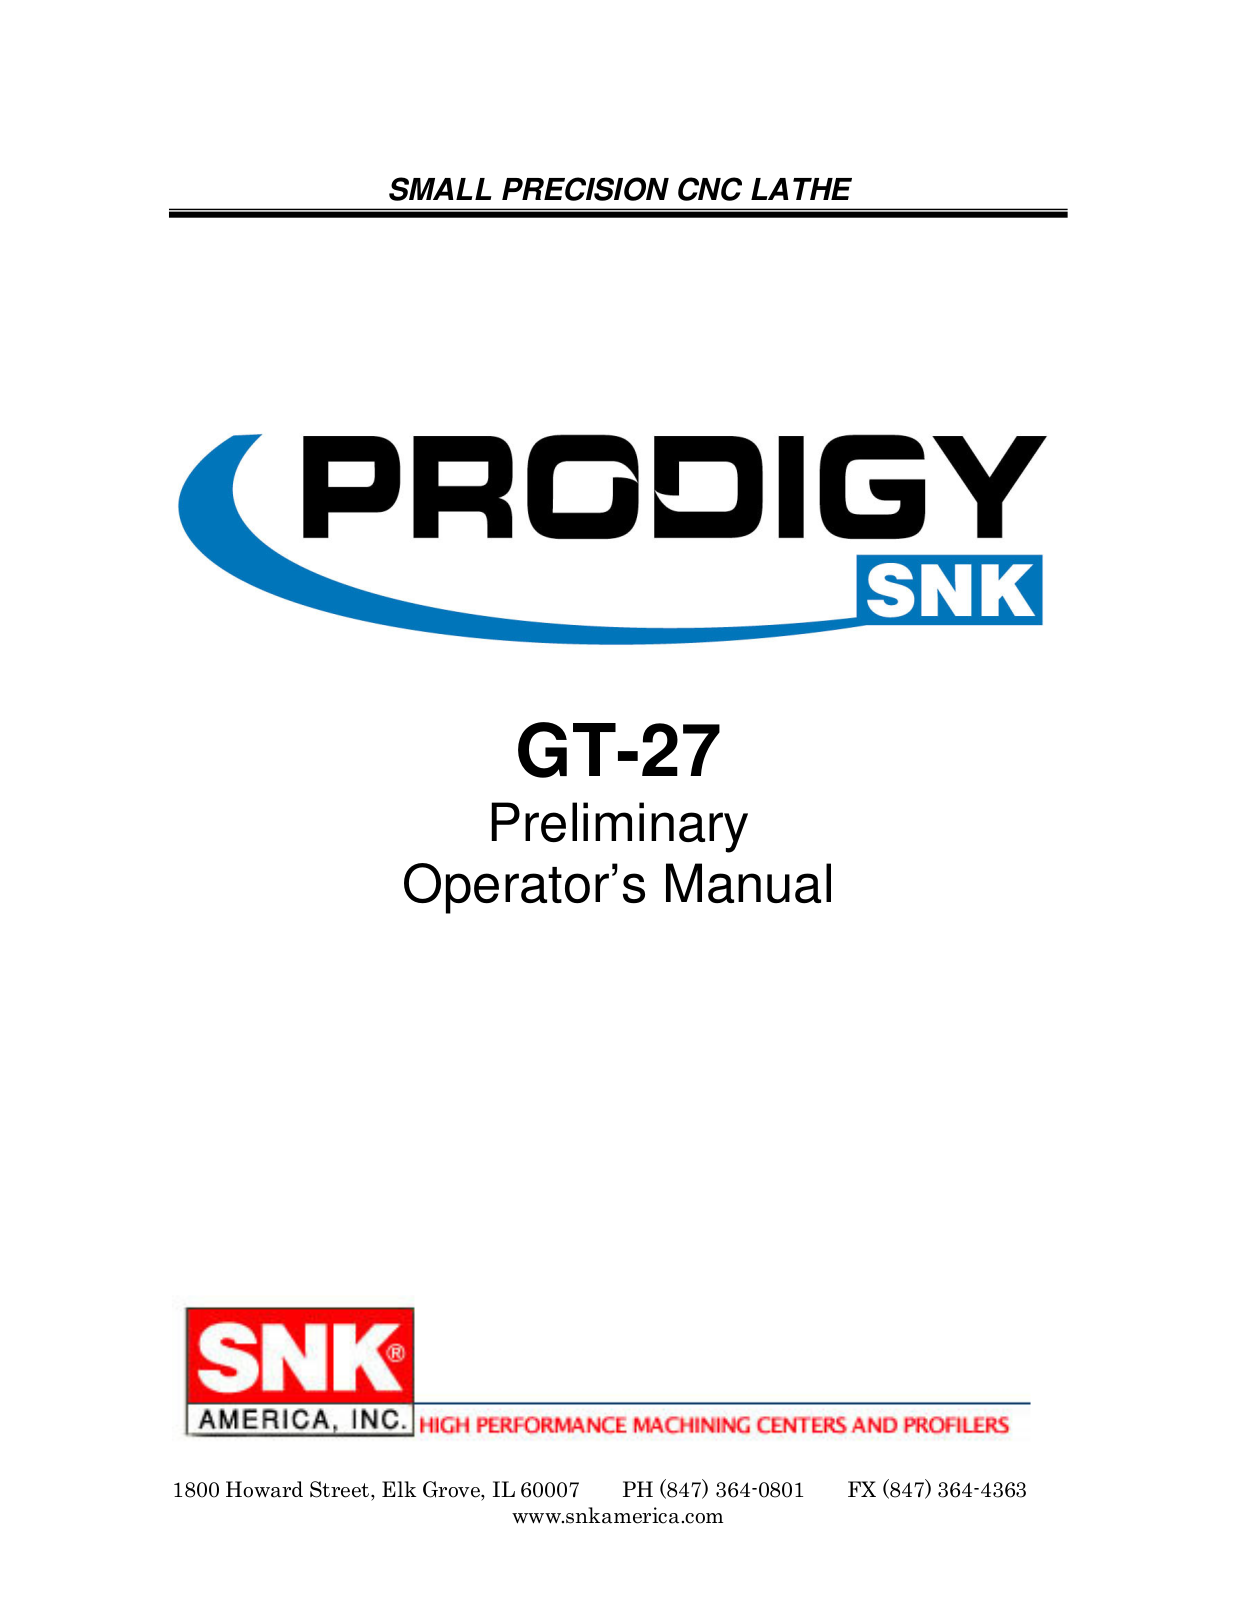 prodigy GT-27 Operators Manual